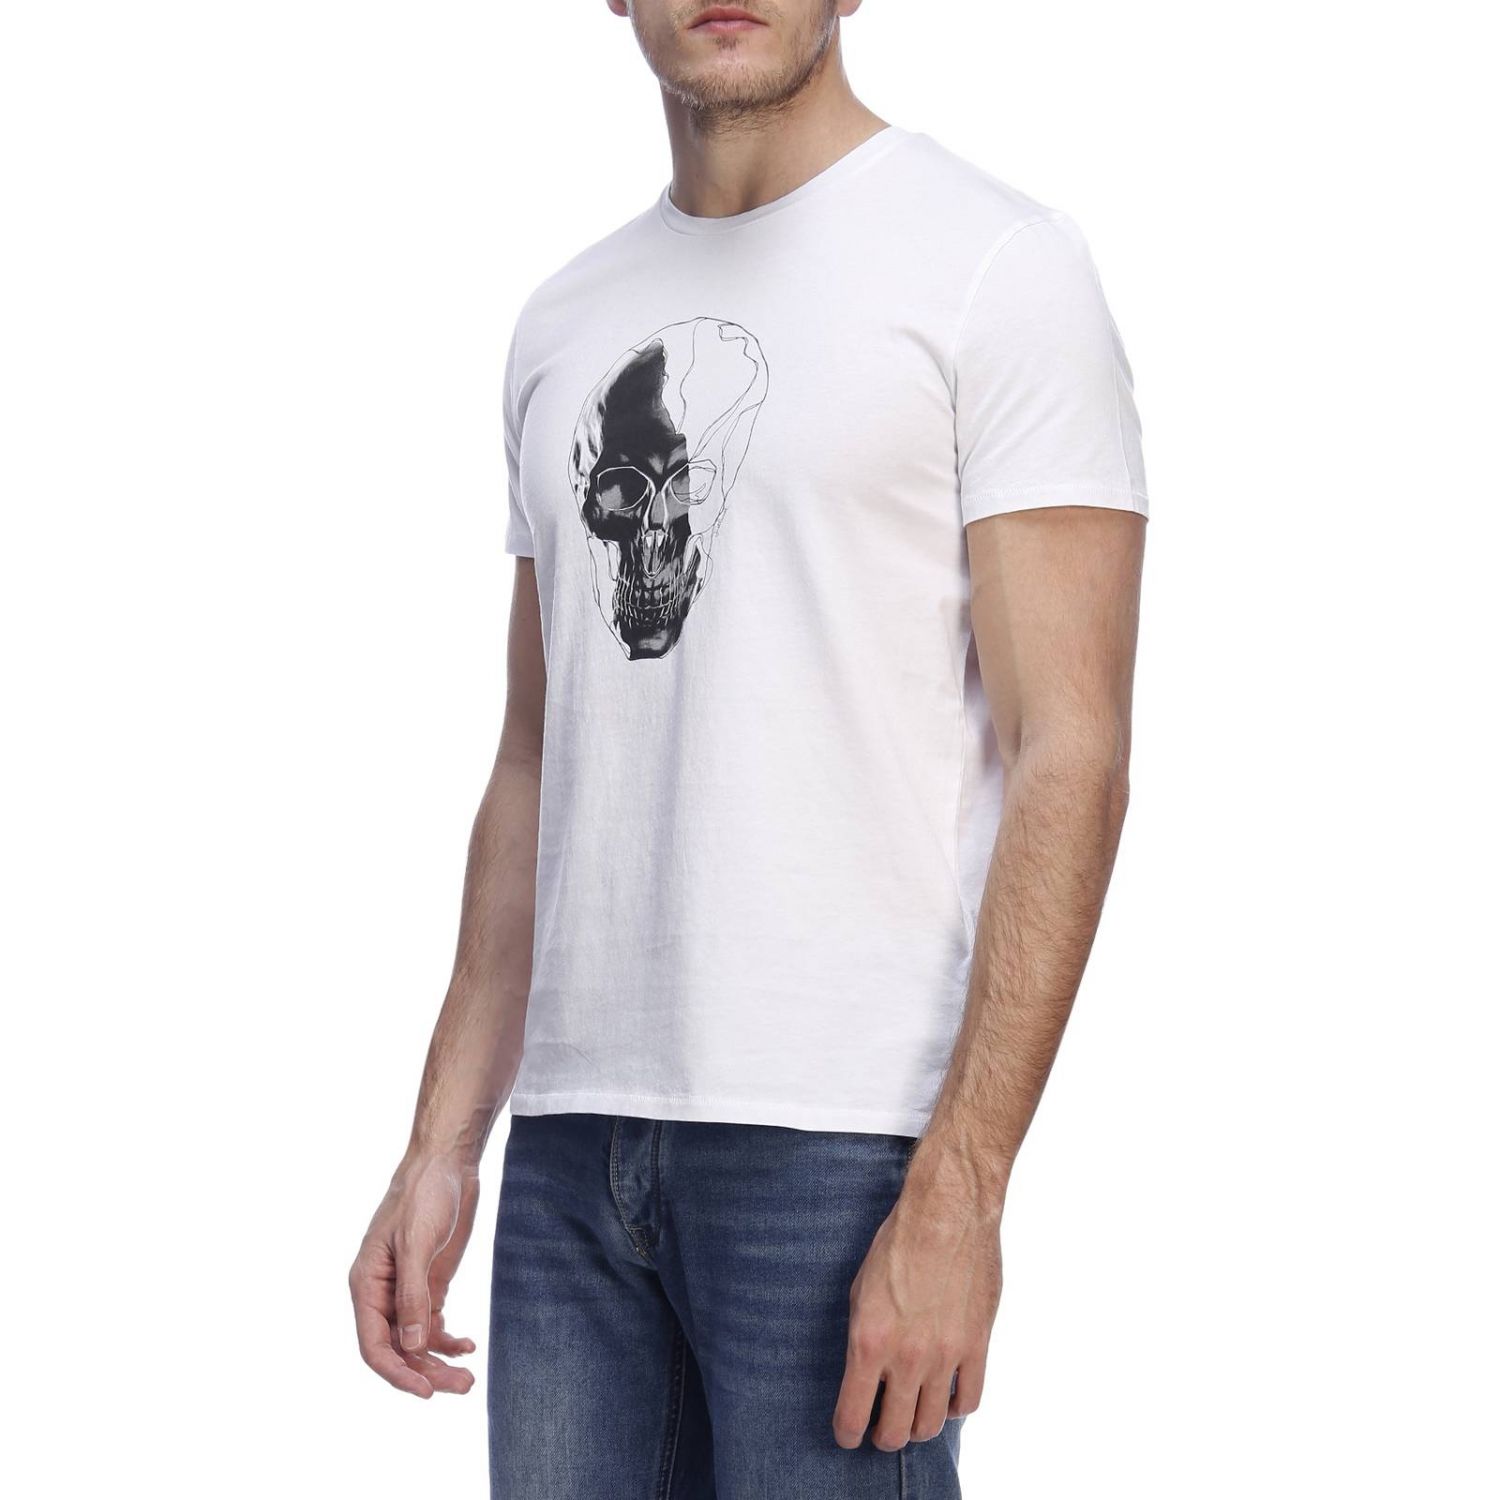 Just Cavalli Outlet: T-shirt men | T-Shirt Just Cavalli Men White | T ...